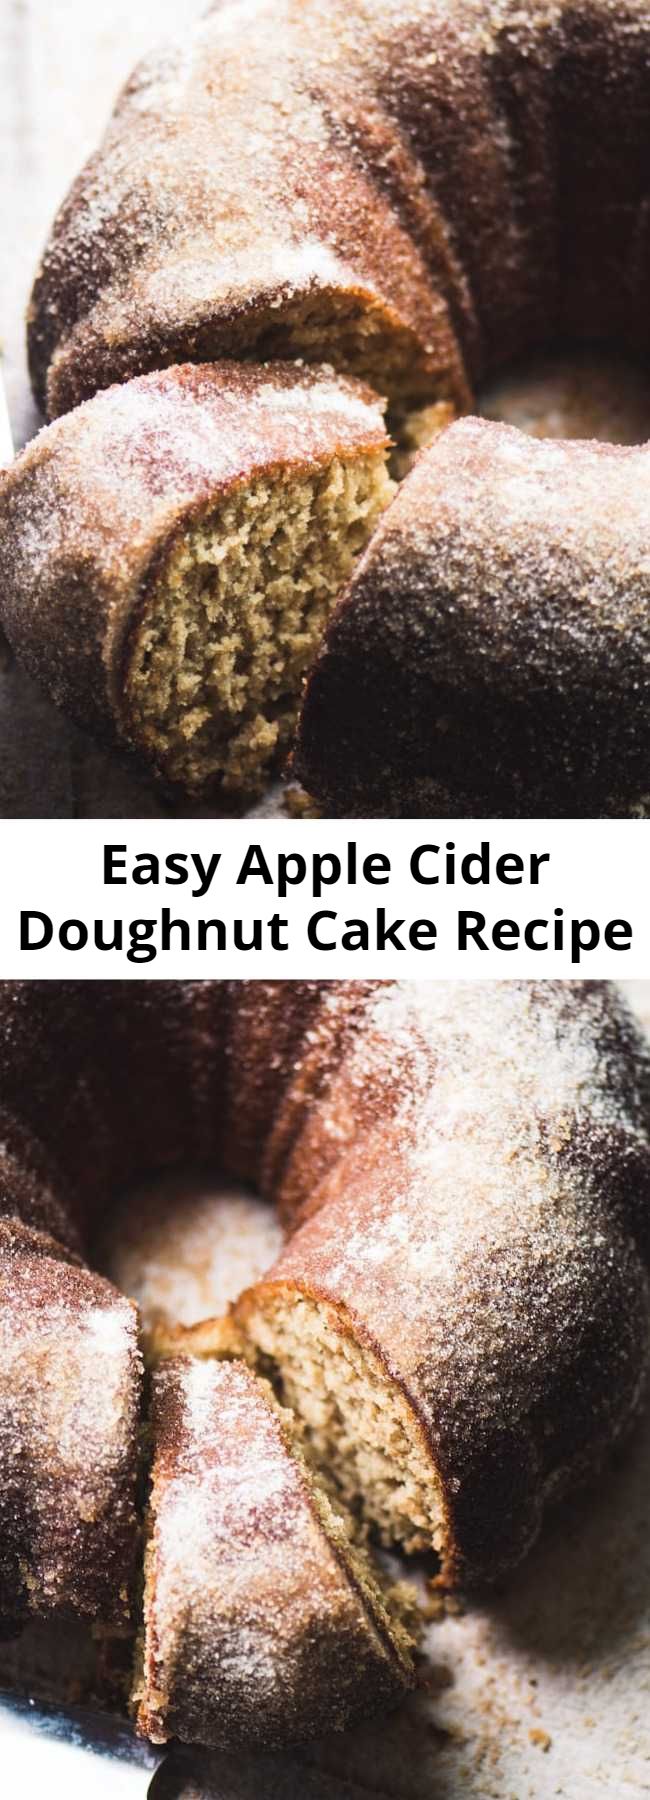 Easy Apple Cider Doughnut Cake Recipe - A warm cinnamon apple cider cake that tastes just like Fall’s iconic apple cider doughnuts. It’s basically everything you love about the season, baked up in a bundt pan. #easy #recipe #cake #ciderdoughnuts #poundcake #bundtcake #applecake #best #dessert #fallrecipe #fall #apples #bundt #coffeecake #brunch